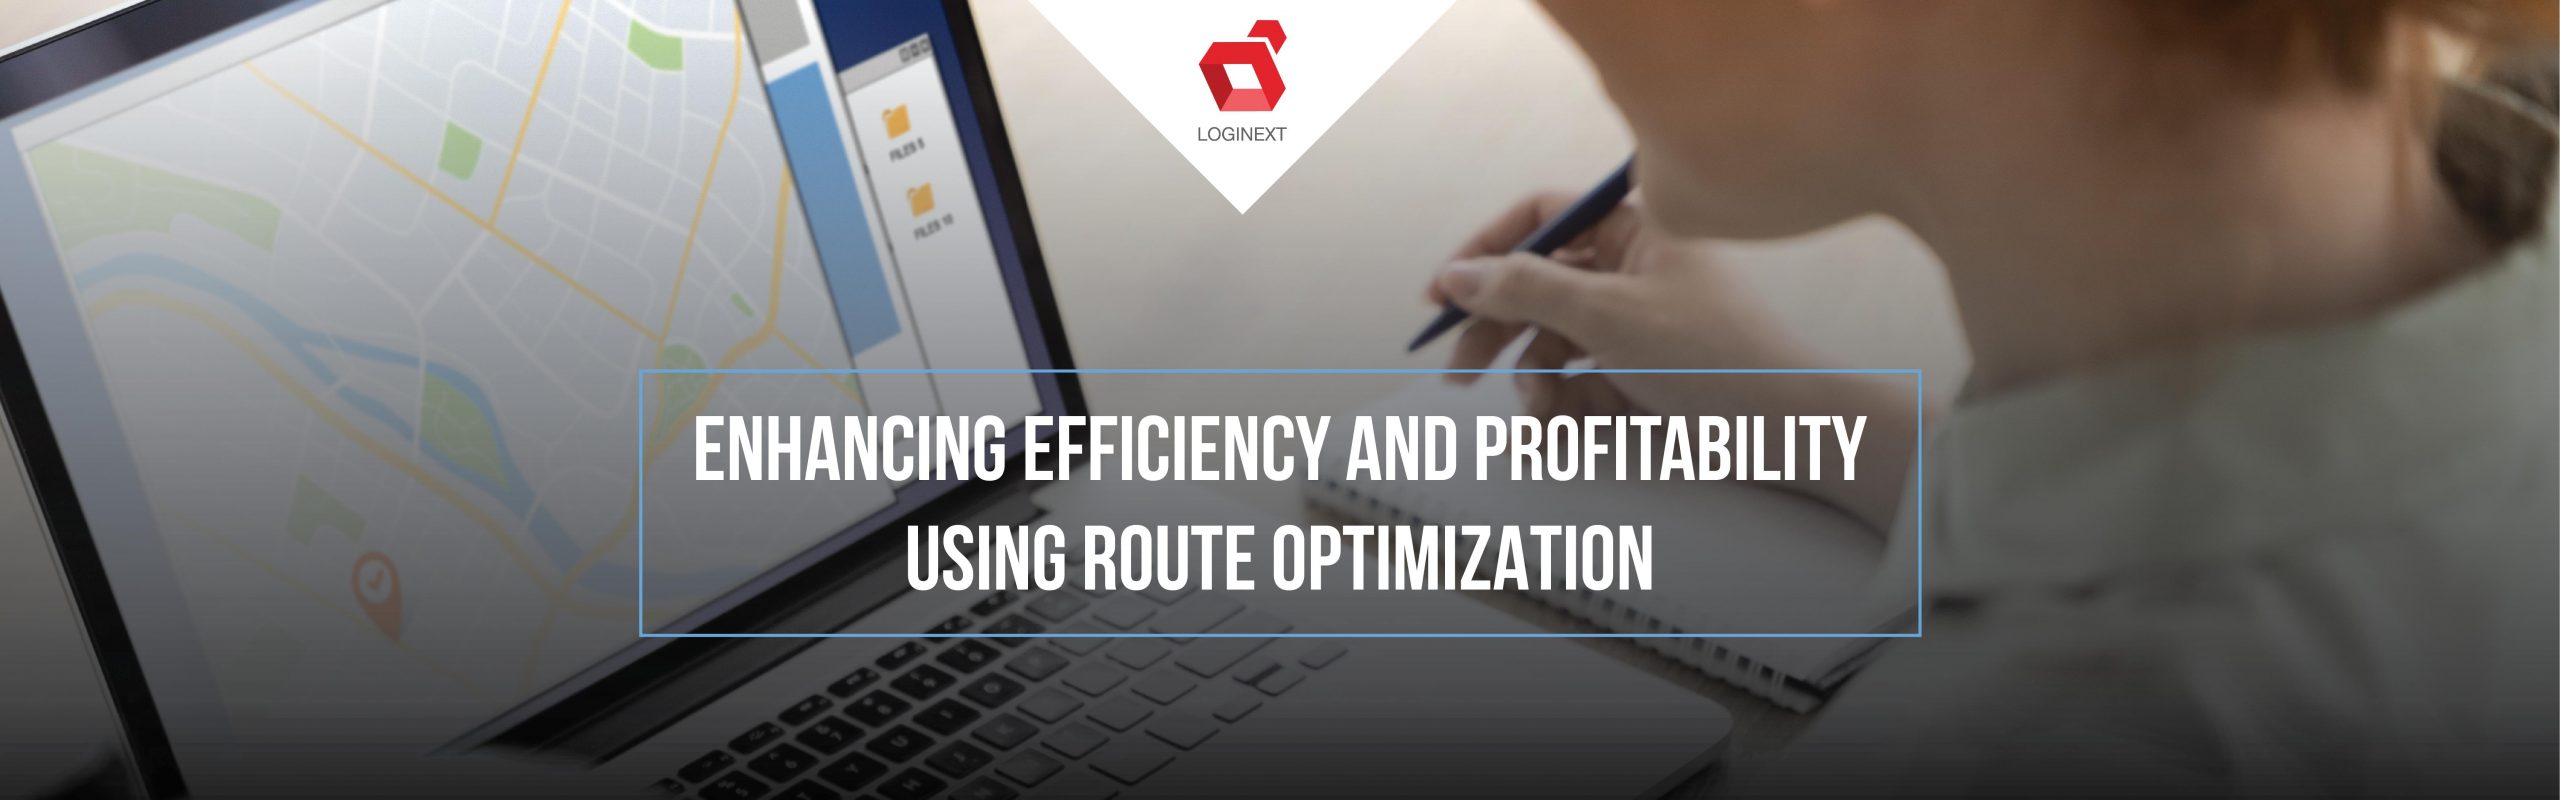 Logistics Route Optimization Using Machine Learning: Enhancing Efficiency and Profitability